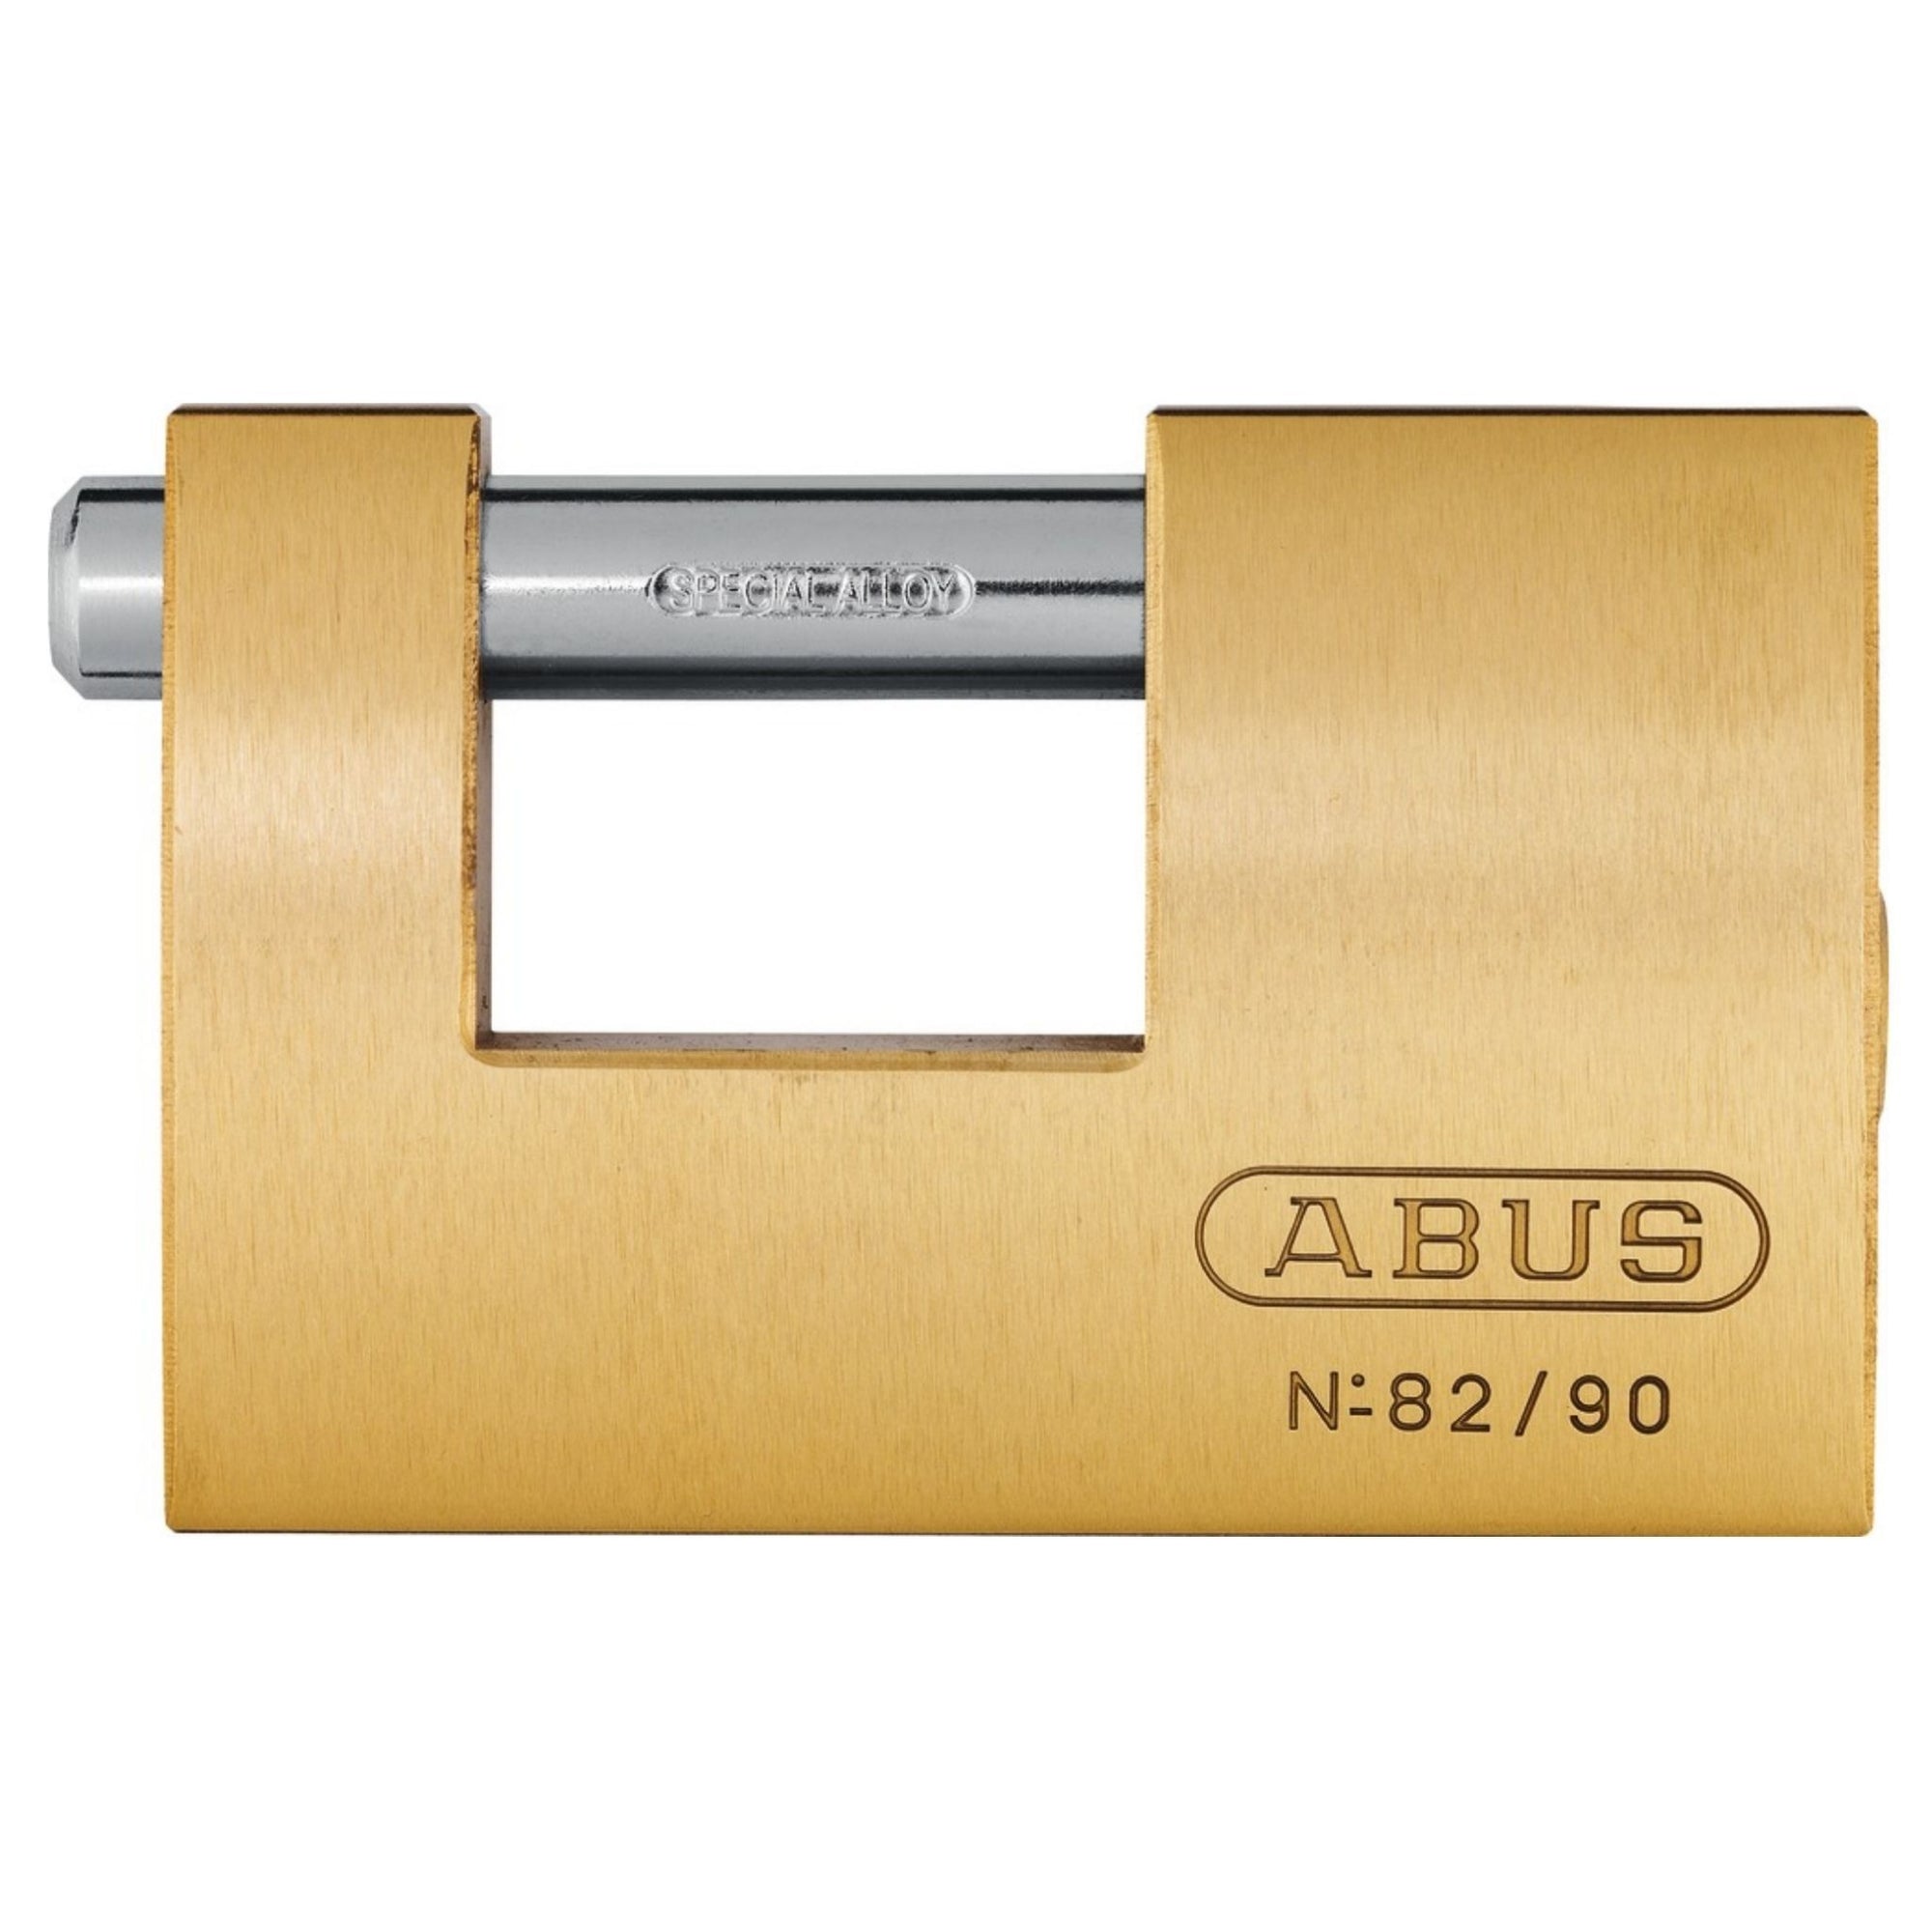 Abus 82/90 KA 8521 Monoblock Lock Brass Mono Padlock Keyed Alike to Match Existing Key# 8521 - The Lock Source